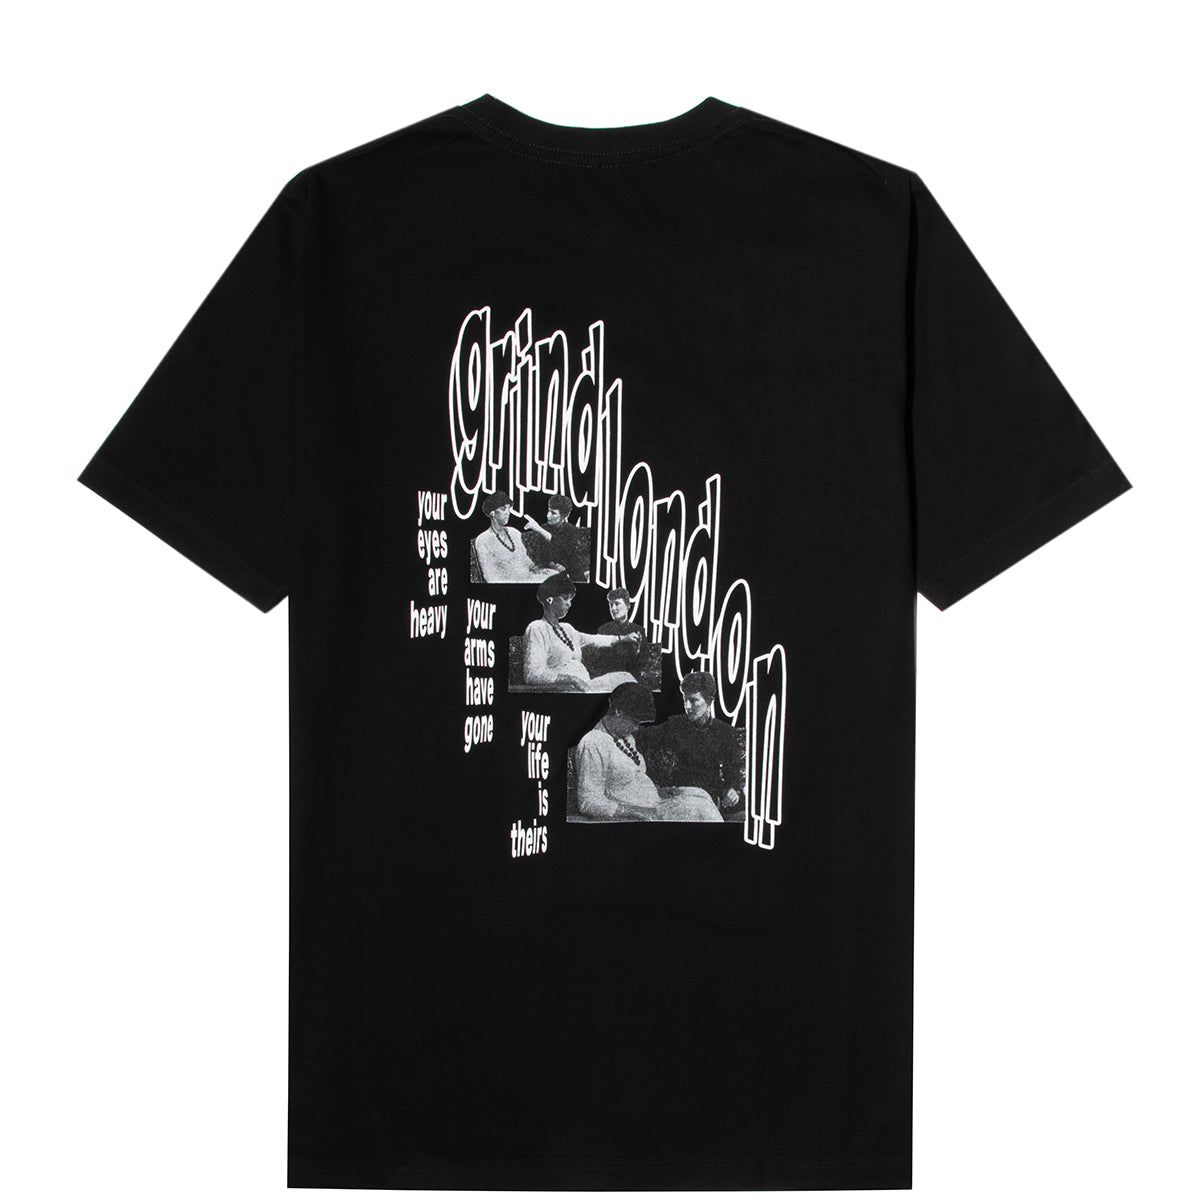 GRINDLONDON T-Shirts YOUR LIFE T-SHIRT